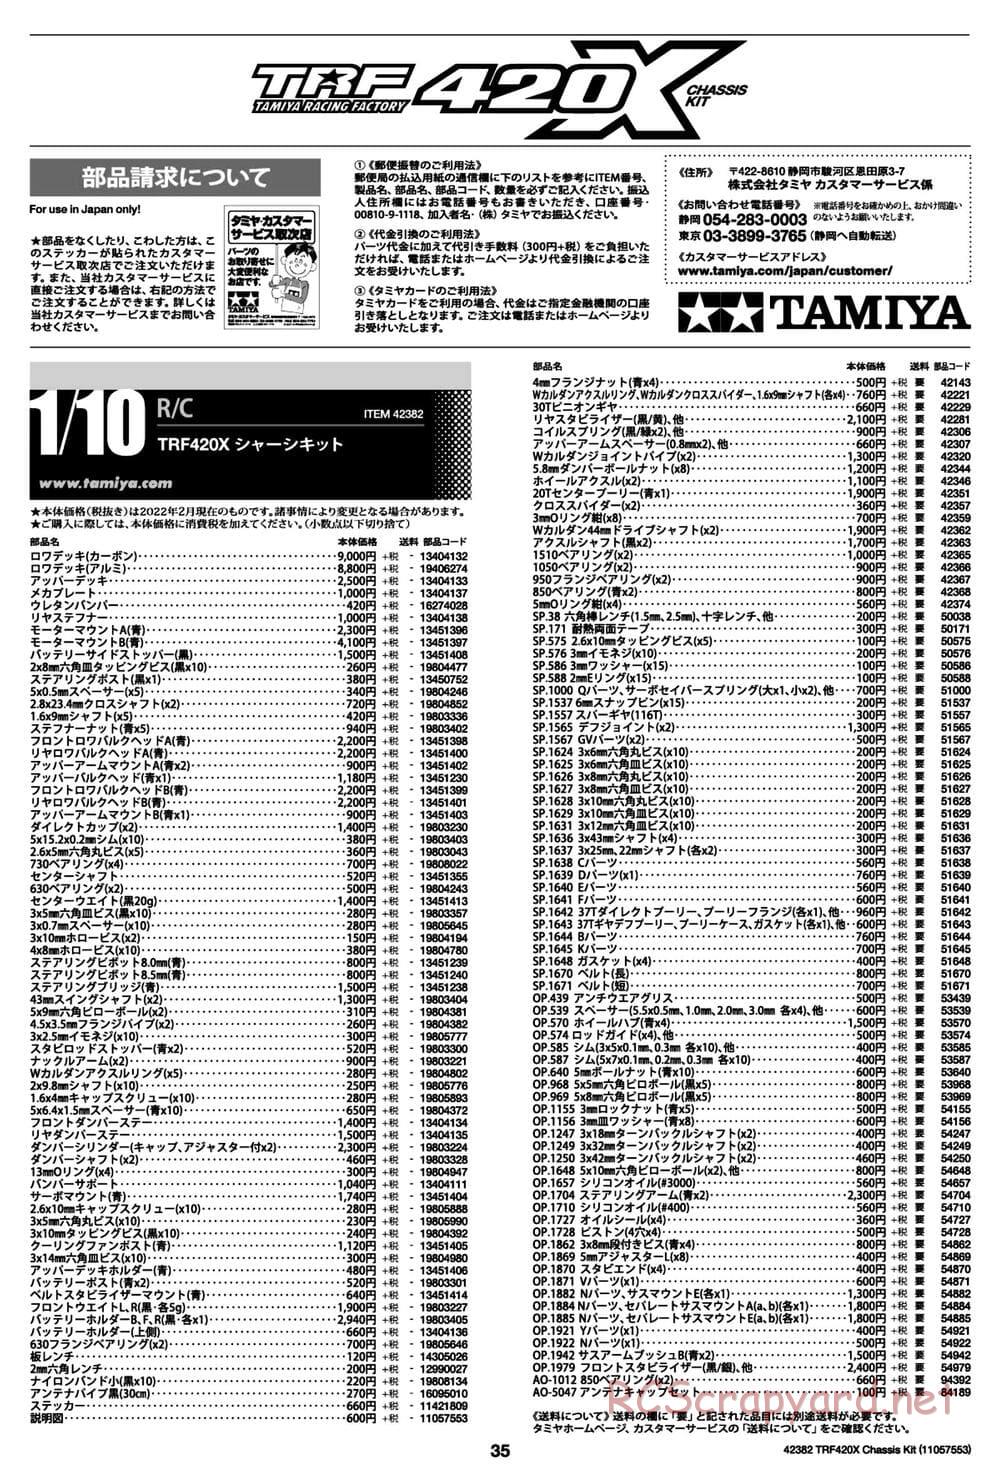 Tamiya - TRF420X Chassis - Manual - Page 35